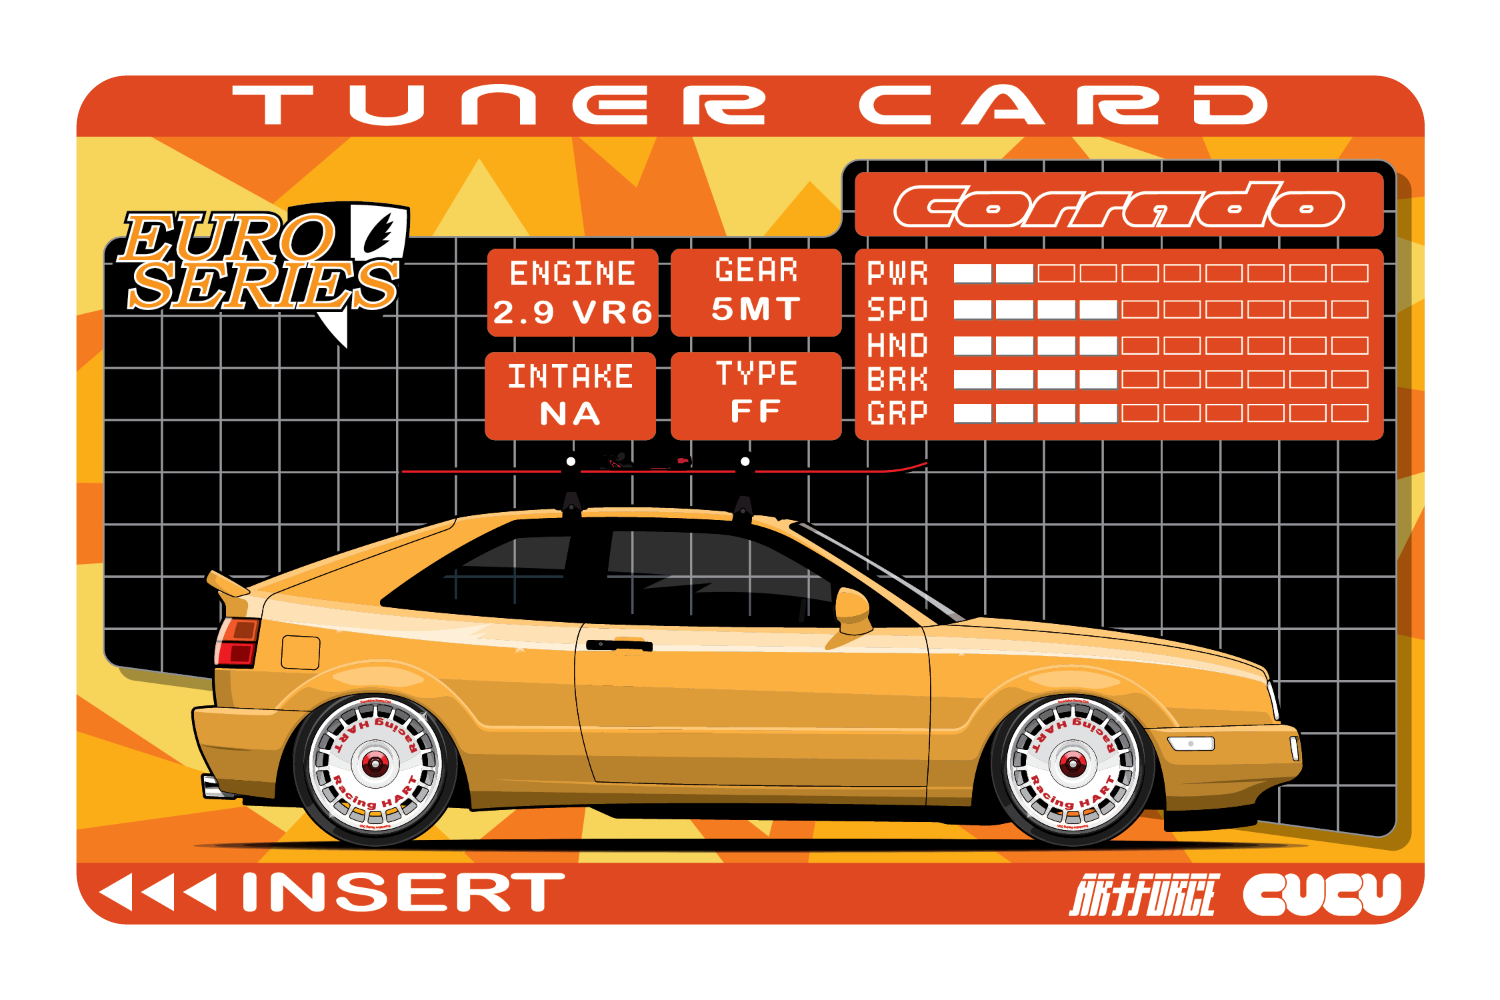 Corrado Tuner Card